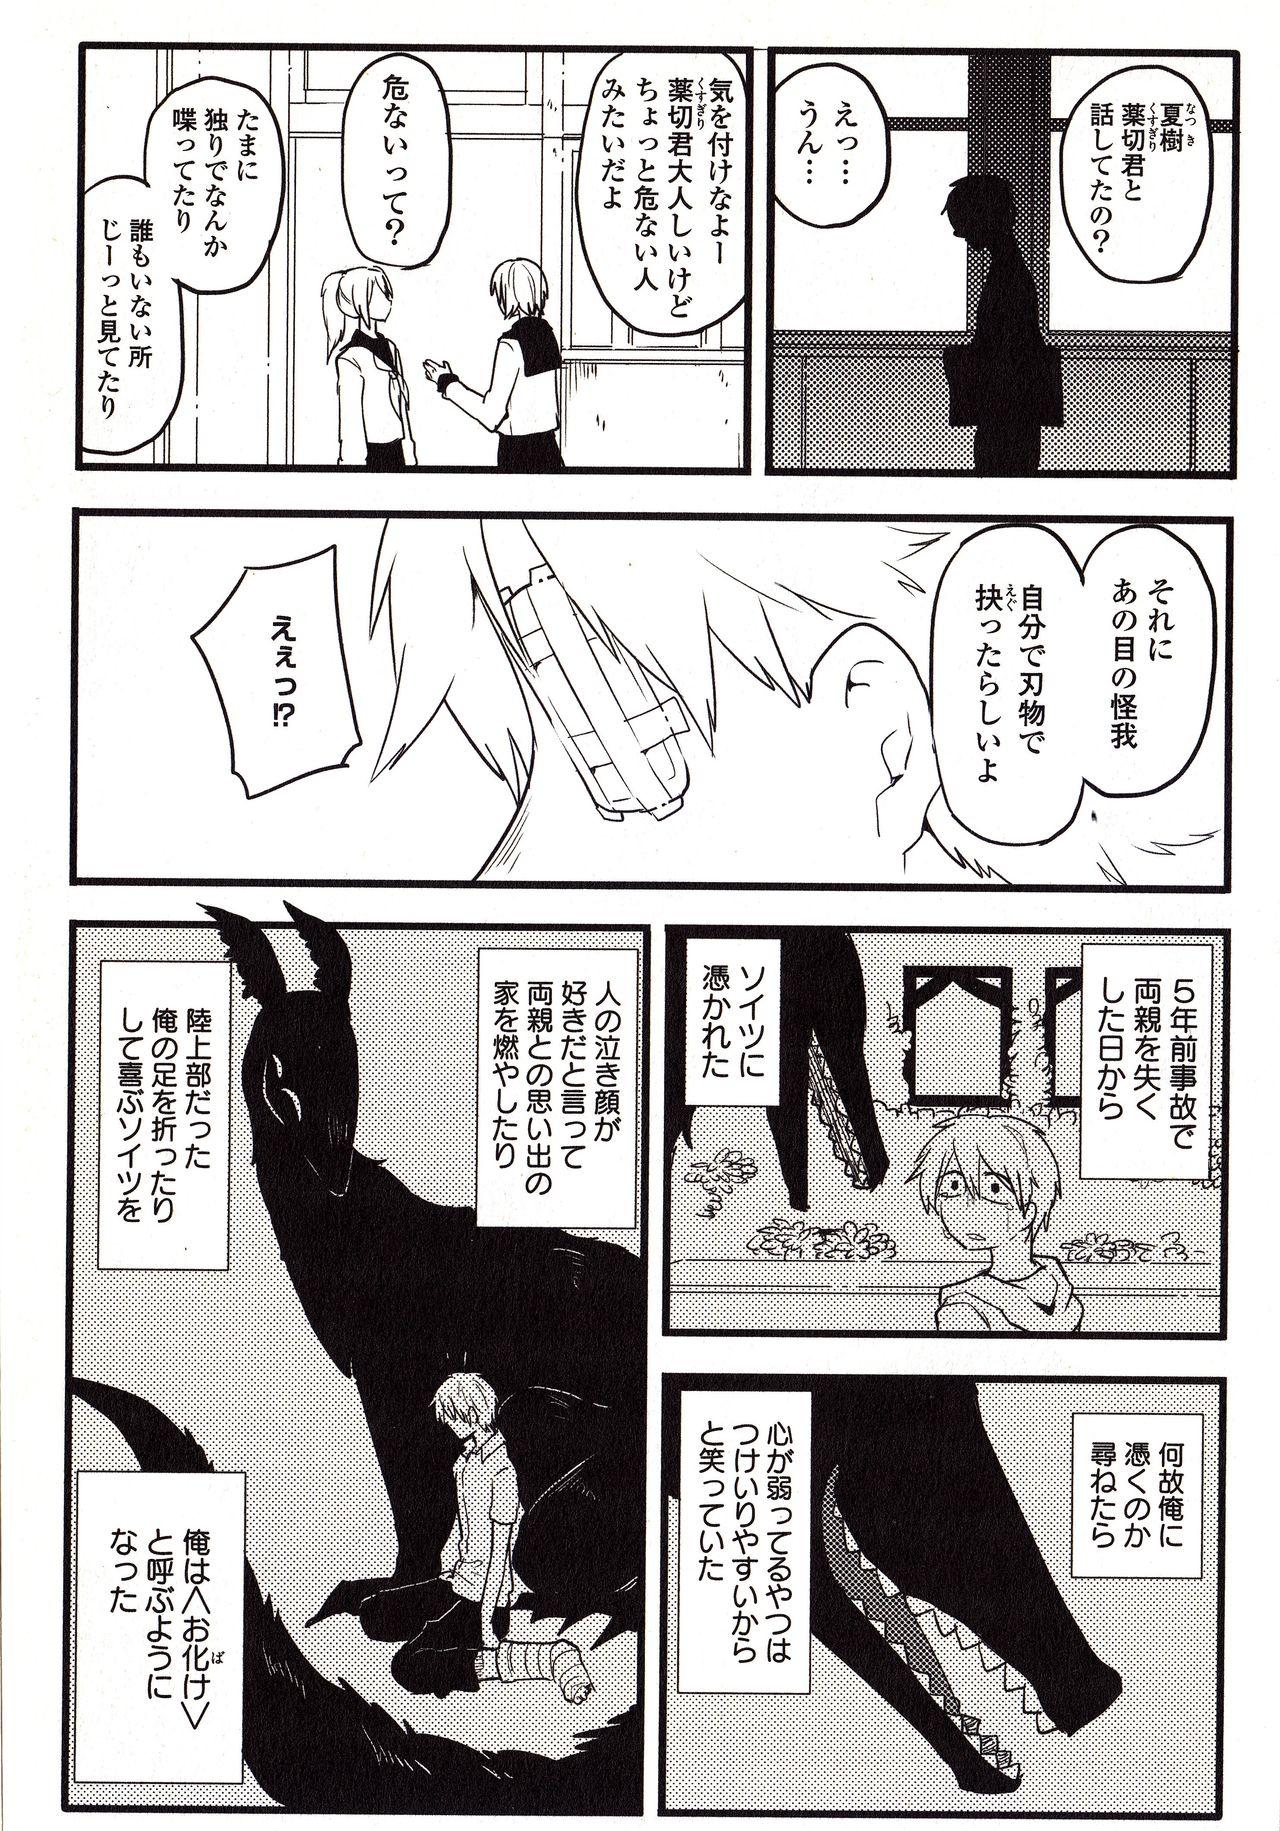 Camshow Sanzo manga Scene - Page 7